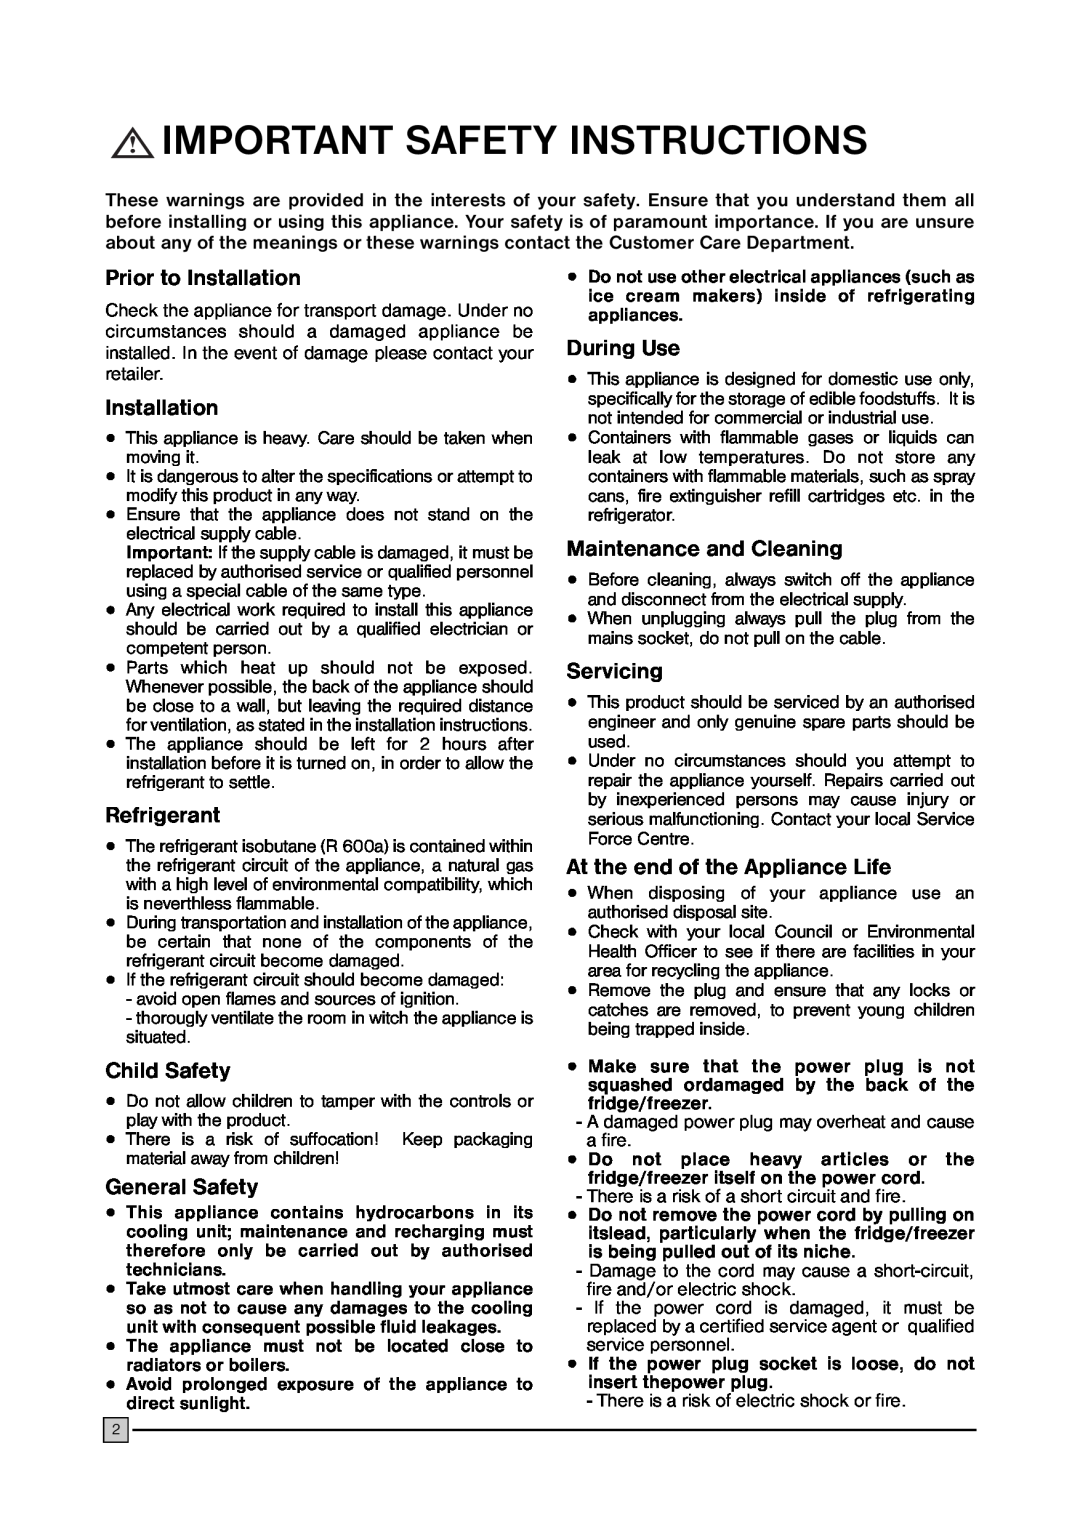 Zanussi ZFC 177 C Important Safety Instructions, Prior to Installation, Refrigerant, Child Safety, General Safety 